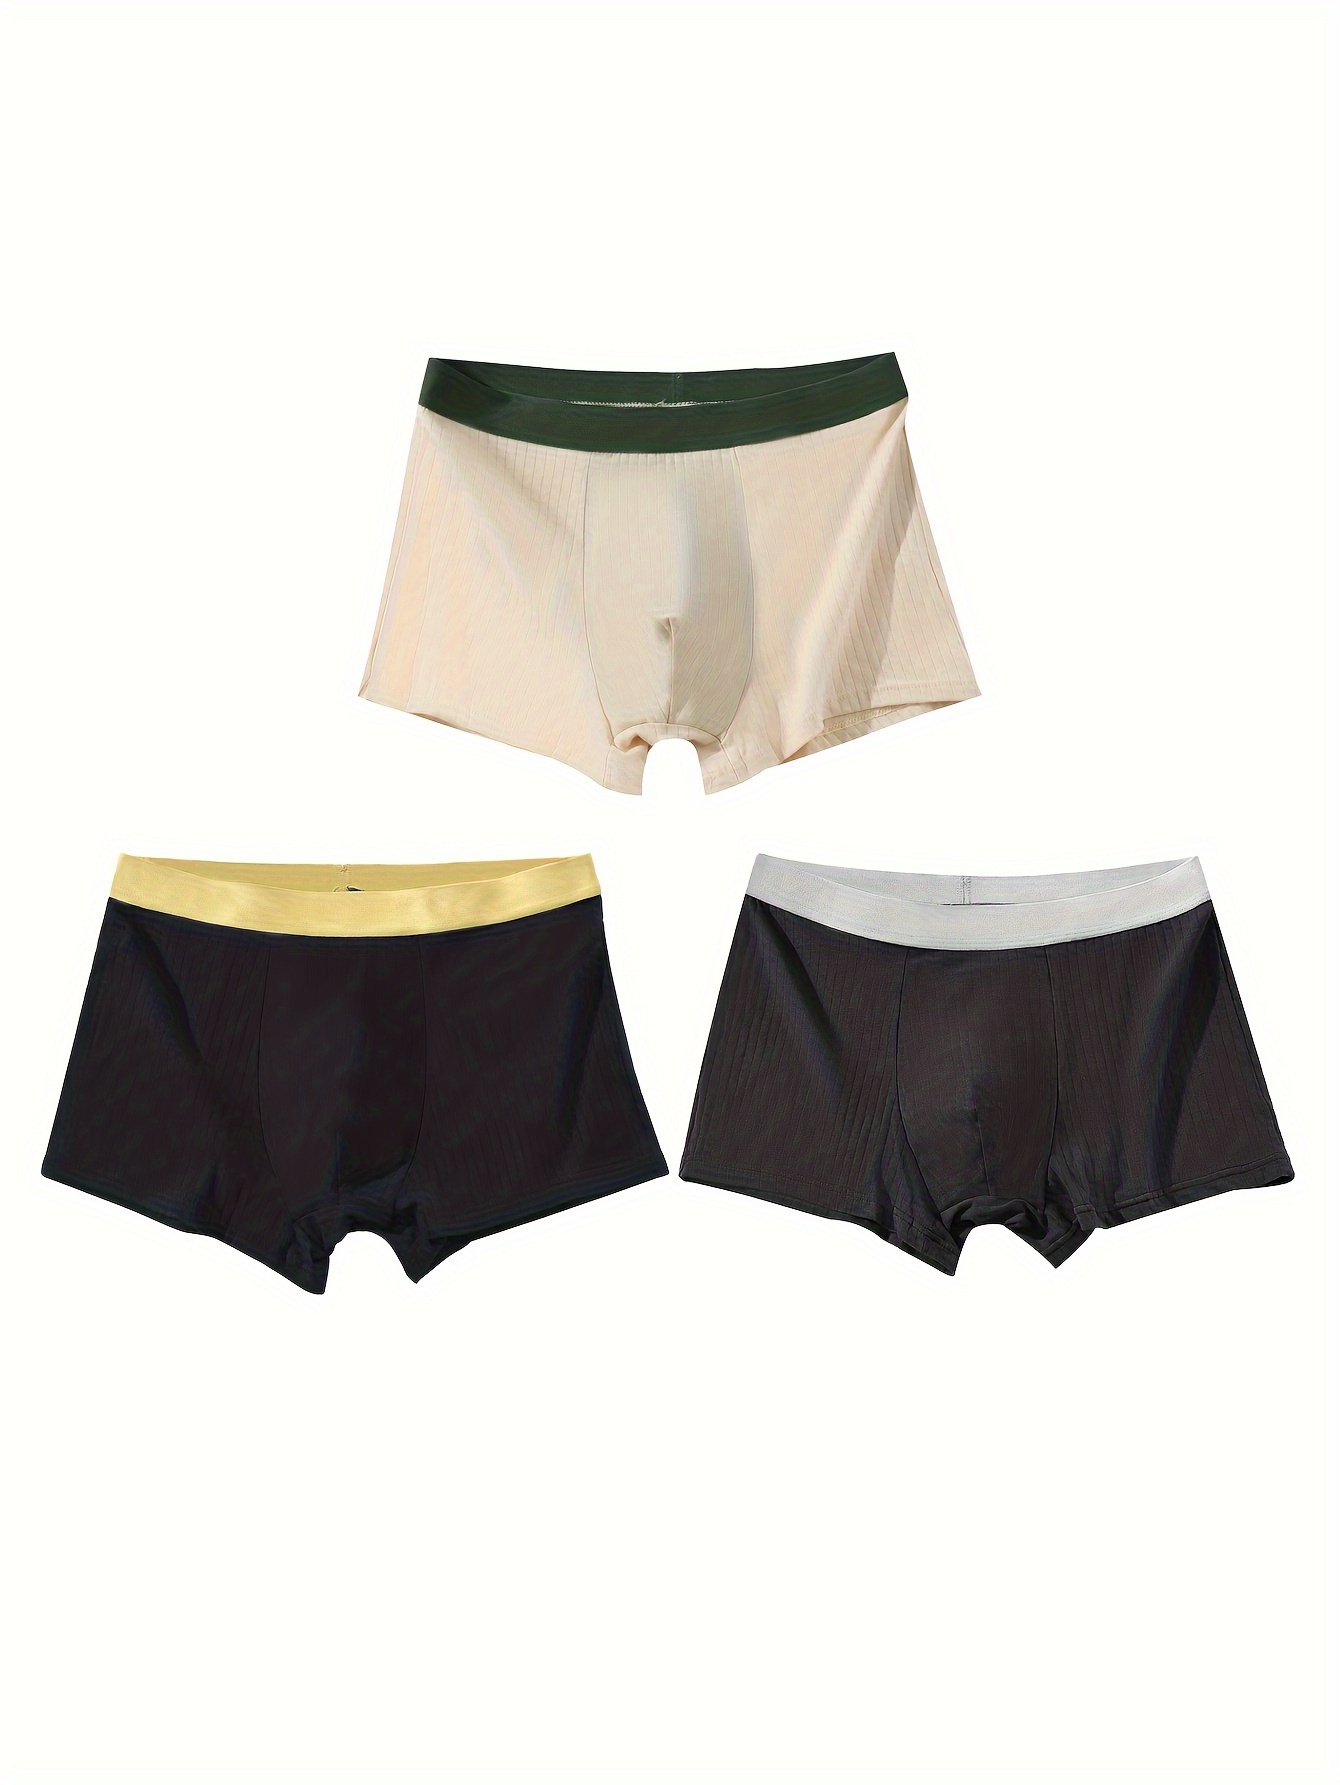 3pcs Men's Underwear, Casual Seamless Breathable Soft Comfy High Stretch  Boxer Briefs Shorts, Cotton Underpants